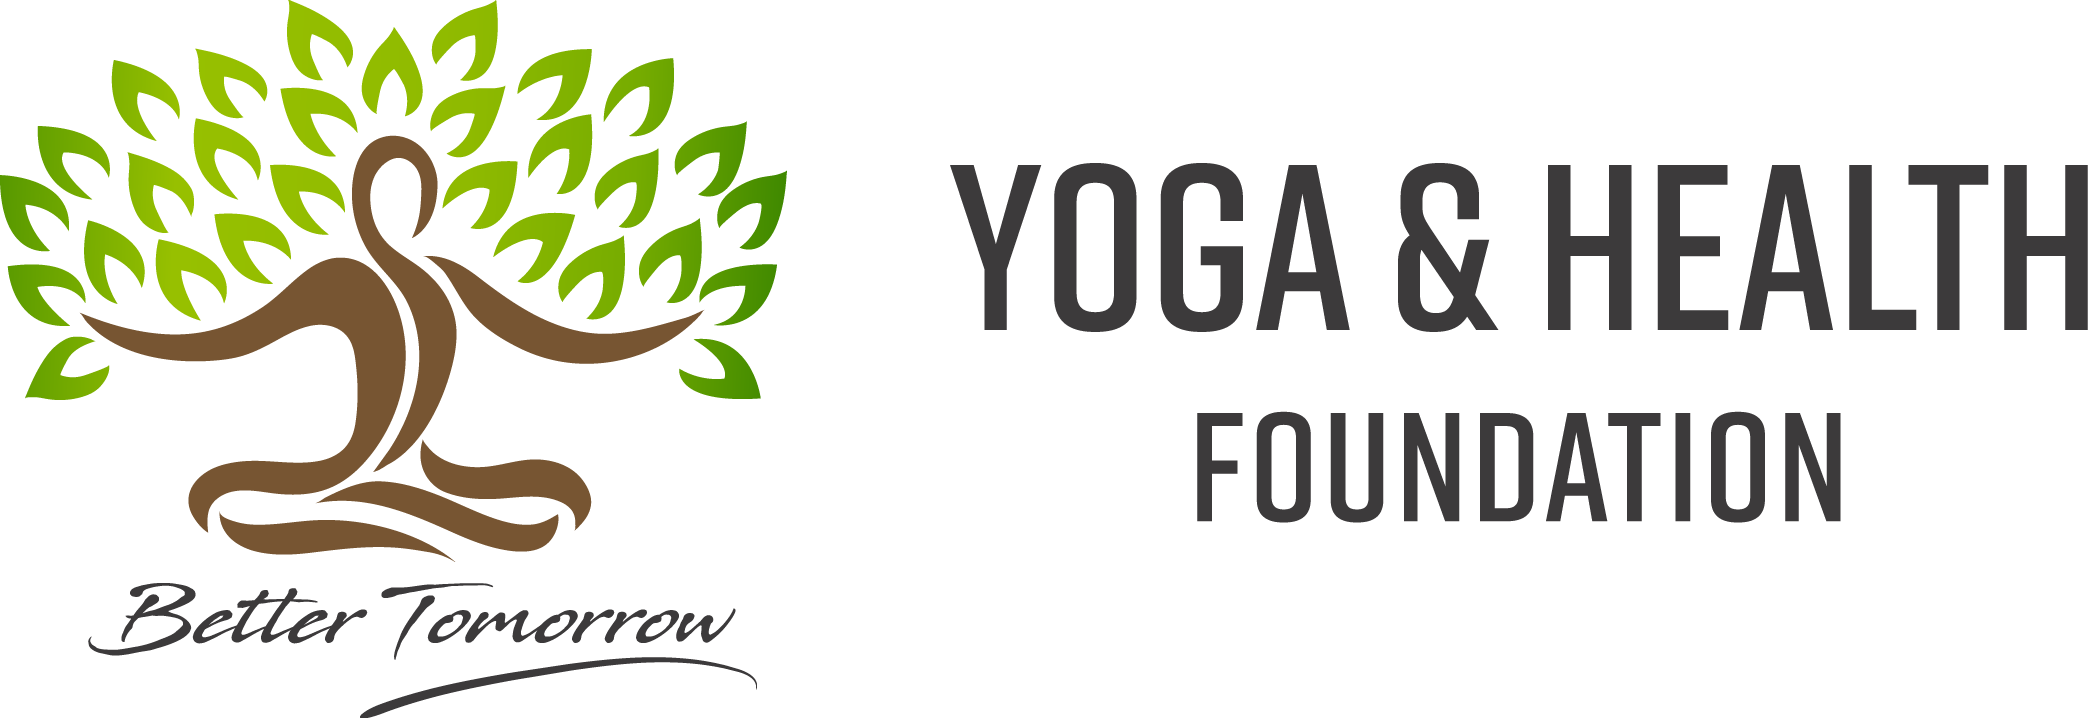 Yoga & Health Expo Foundation